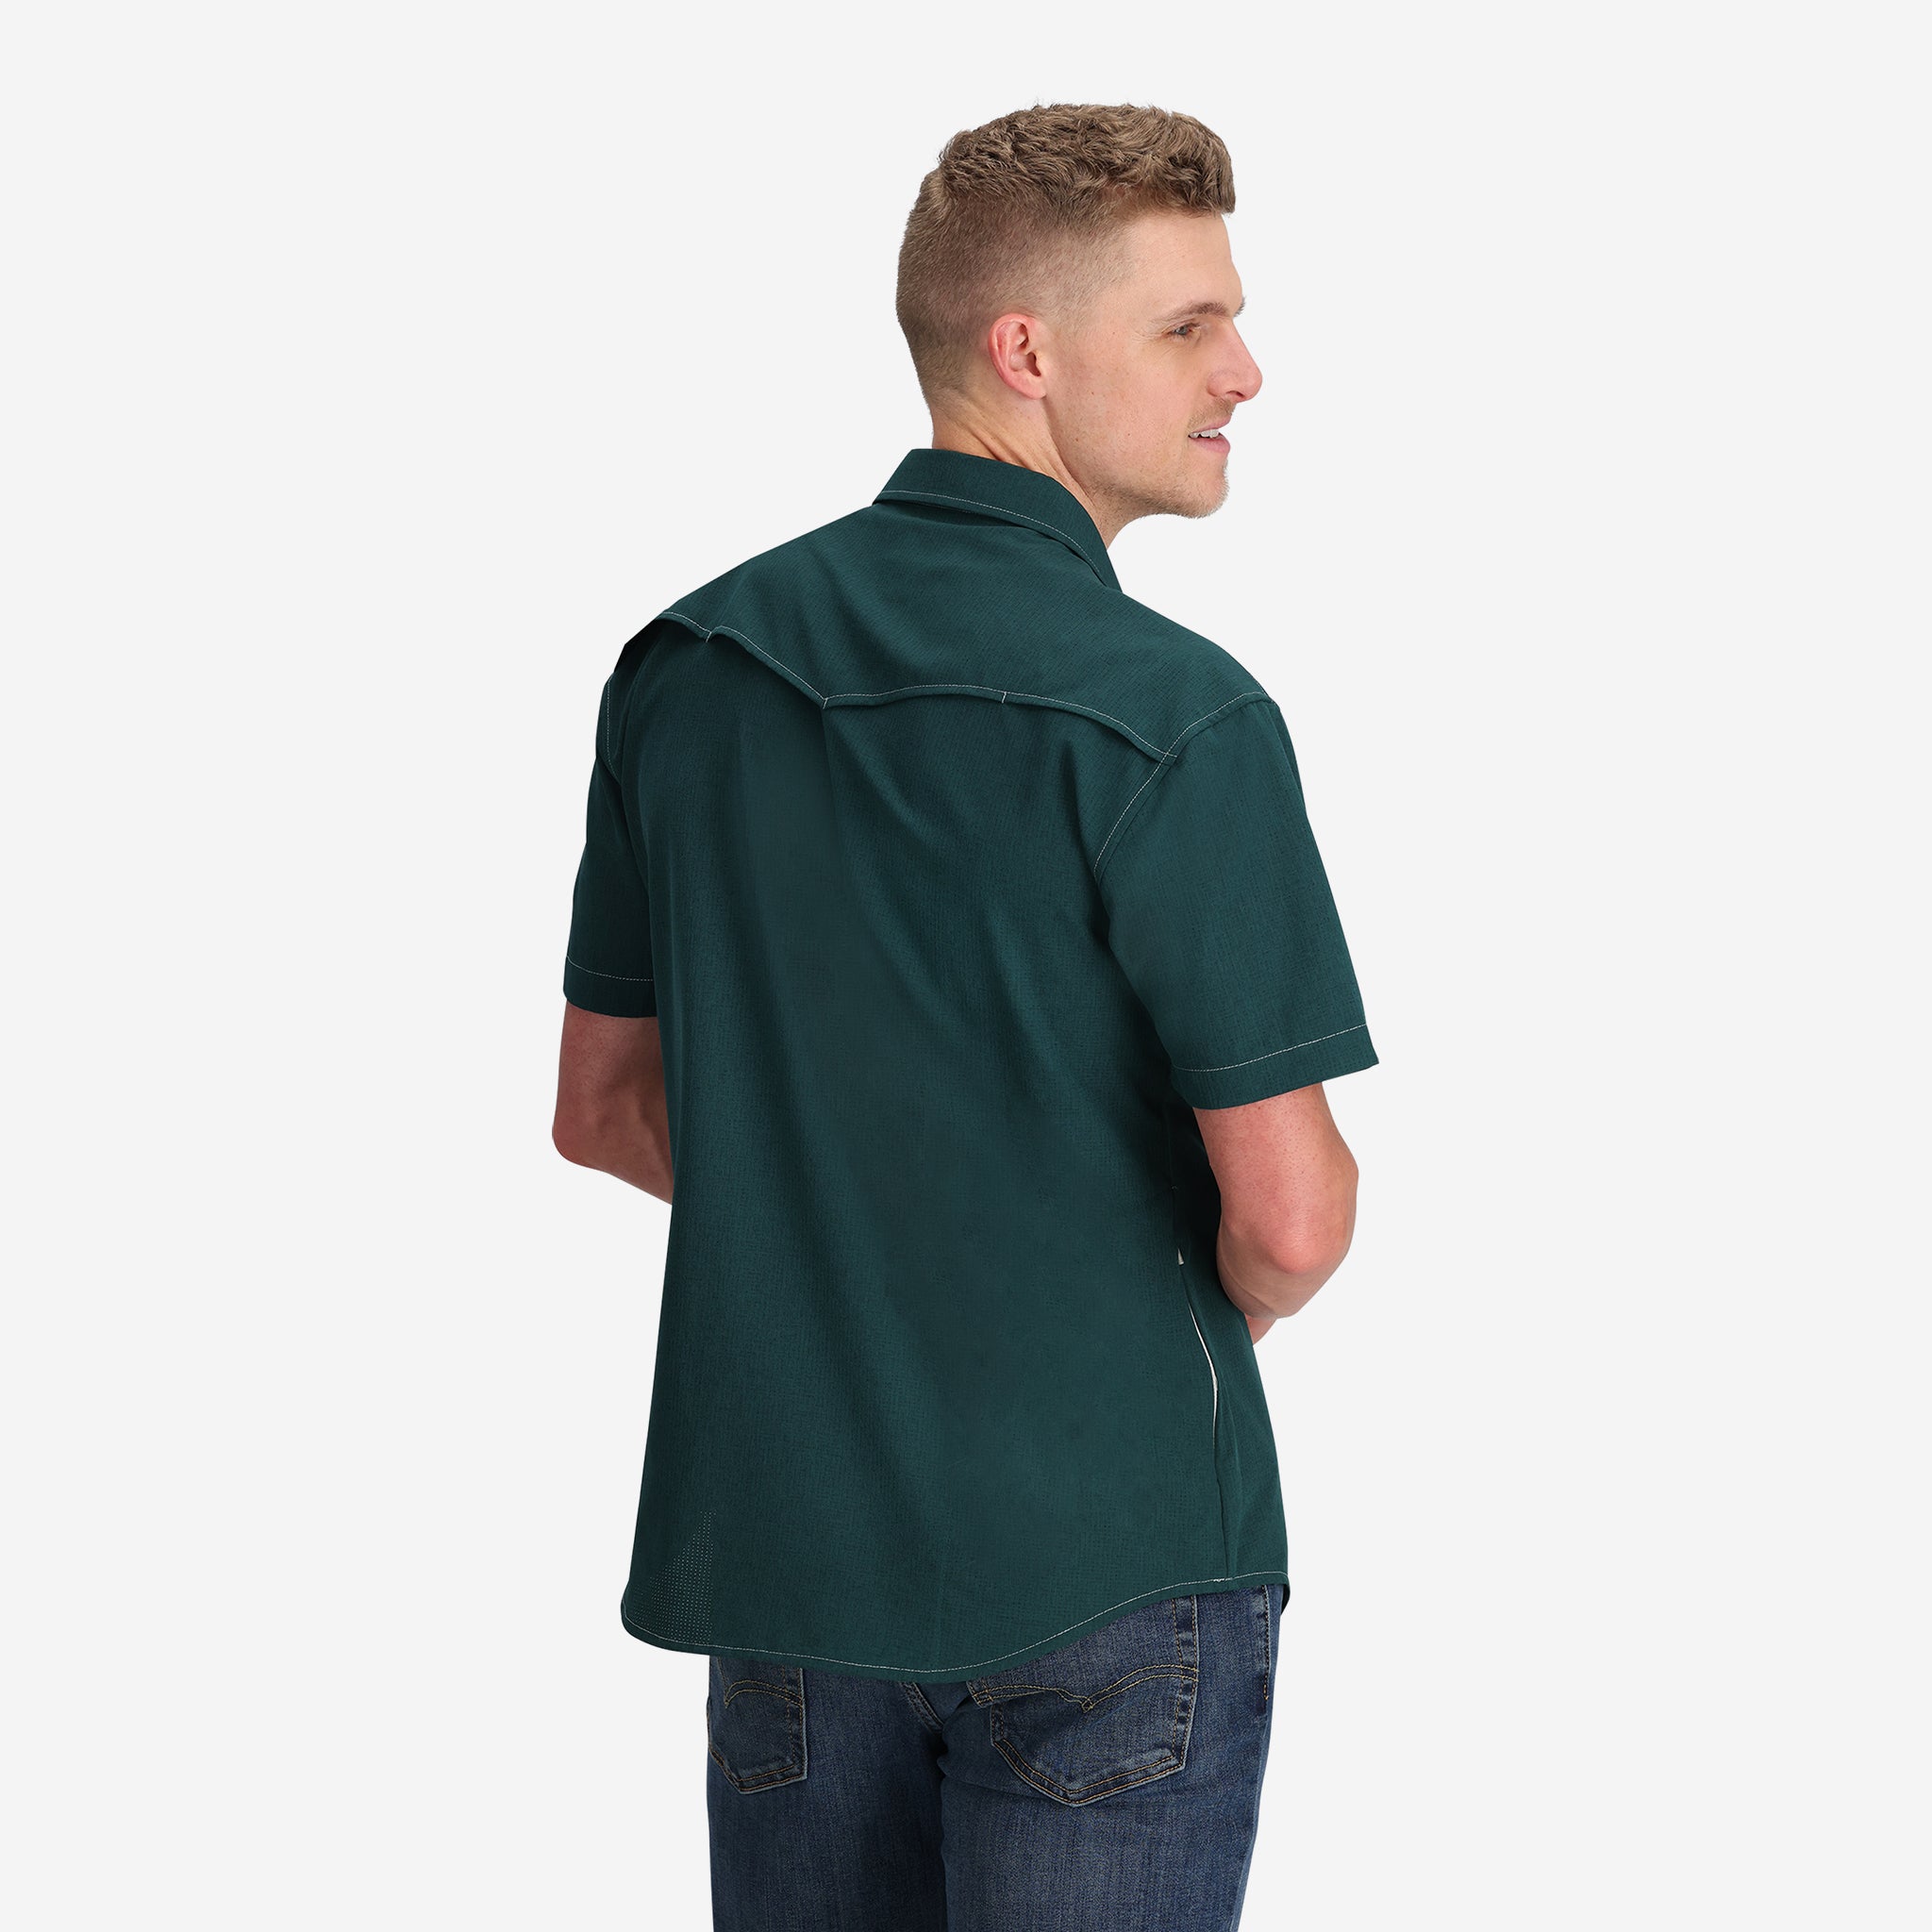 Men's Enduro Solid Teal Tech Shirt